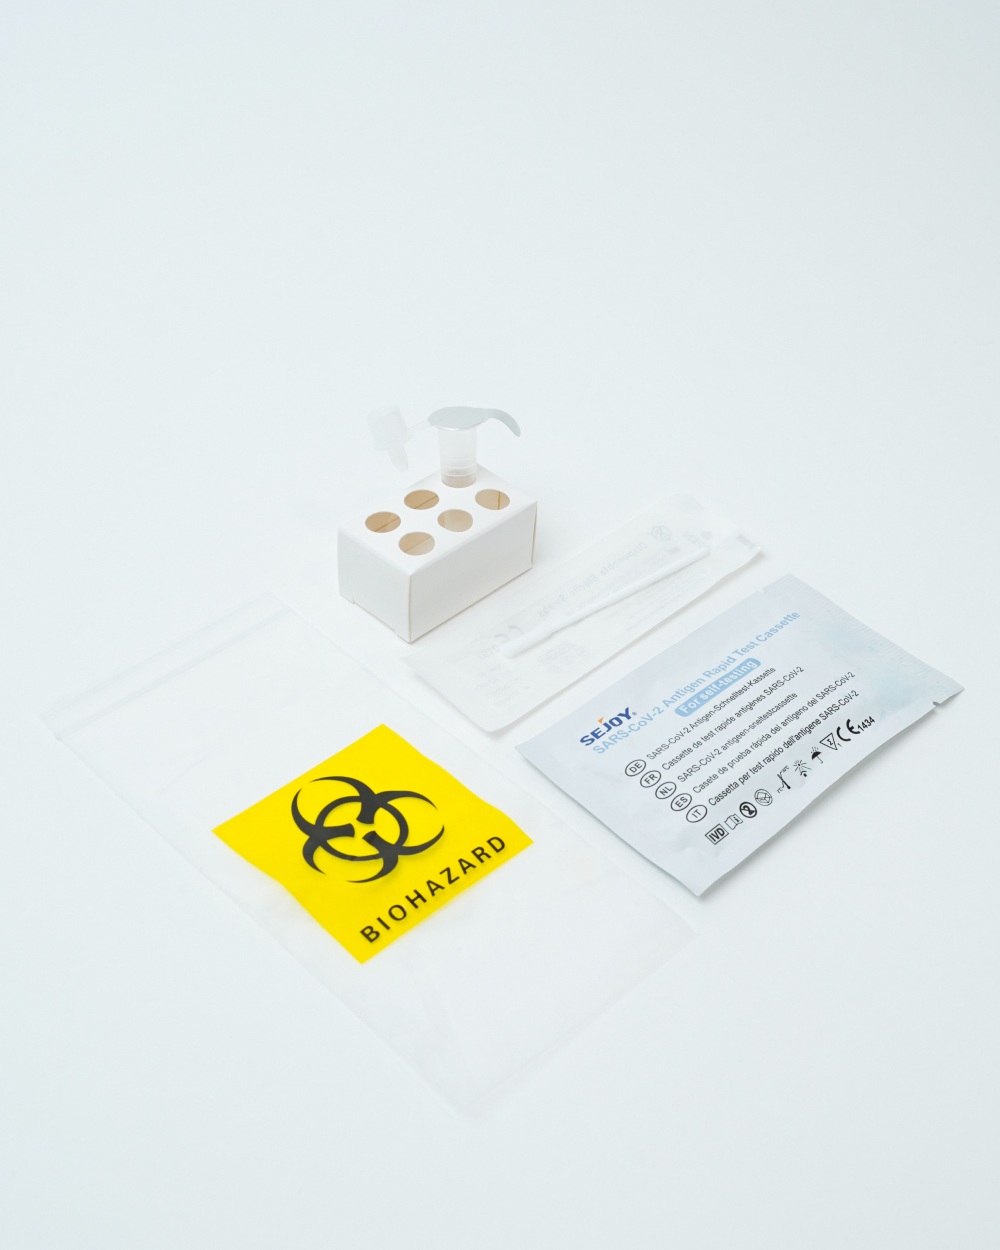 Sejoy 5 Pack - COVID-19 Antigen Rapid Tests Lay Tests Self Test